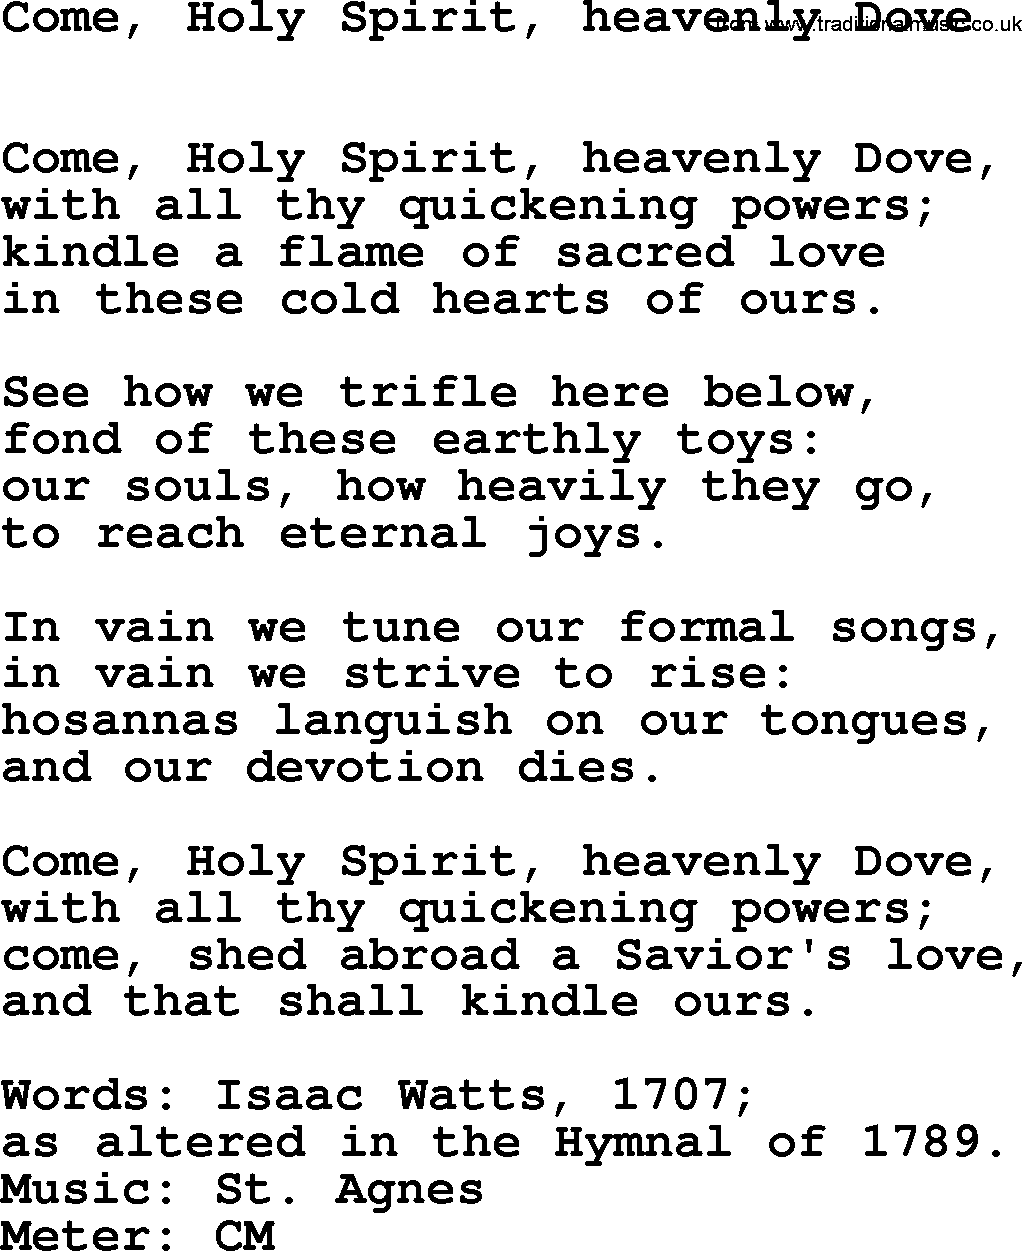 Book of Common Praise Hymn: Come, Holy Spirit, Heavenly Dove.txt lyrics with midi music